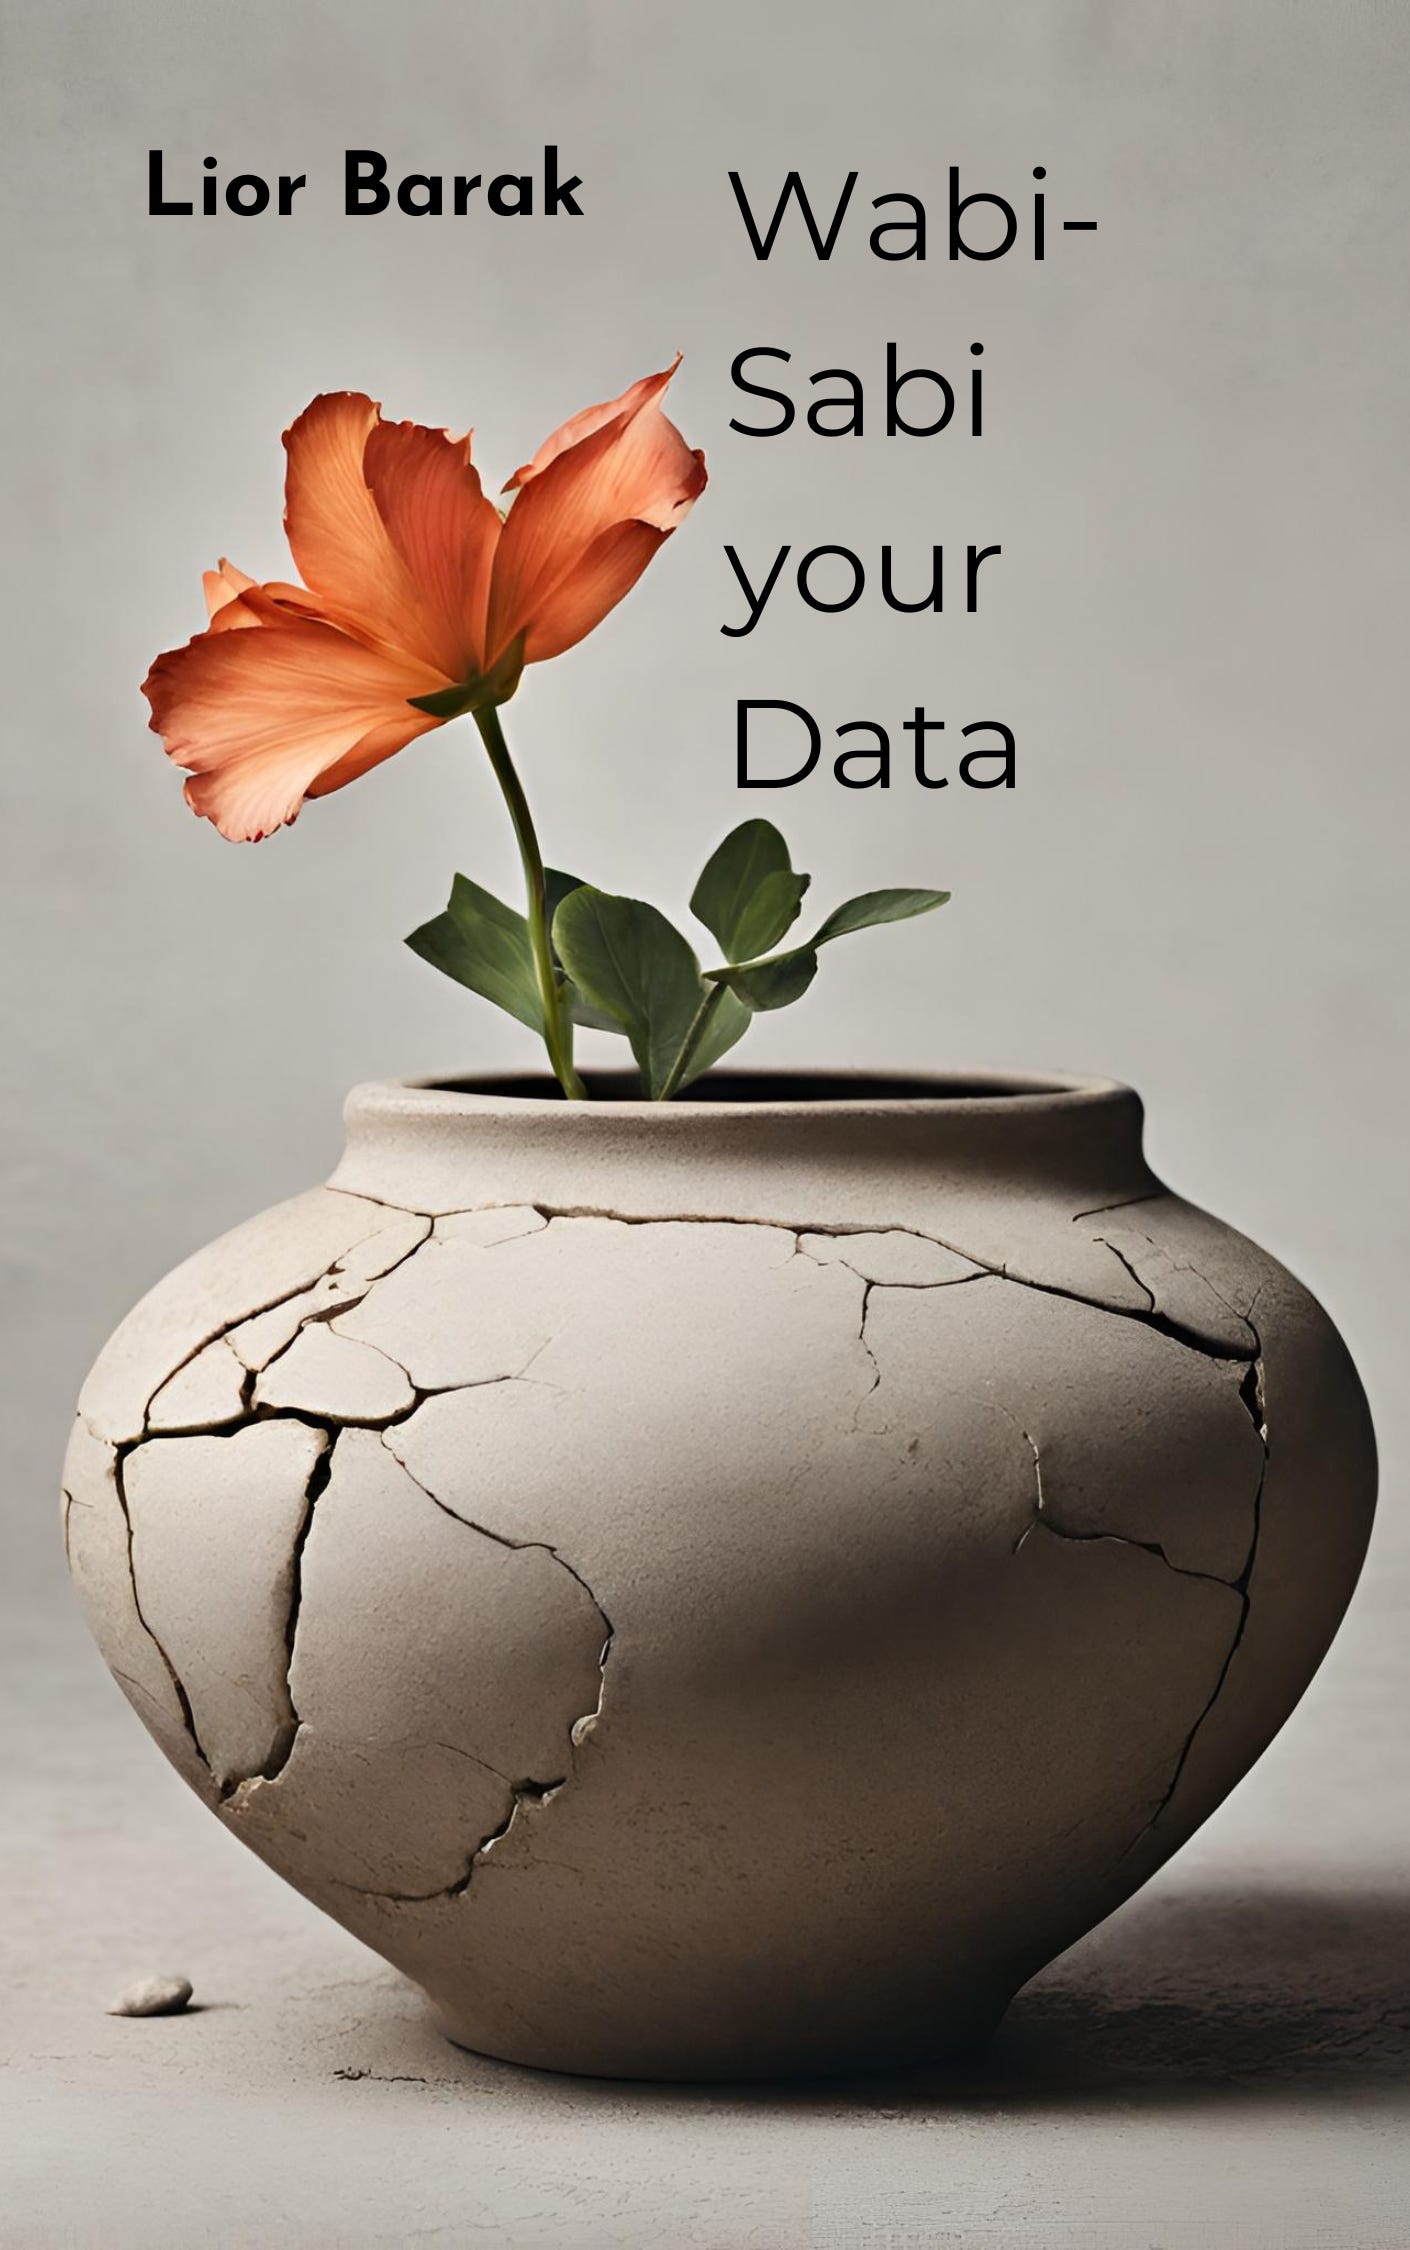 Wabi-Sabi your Data